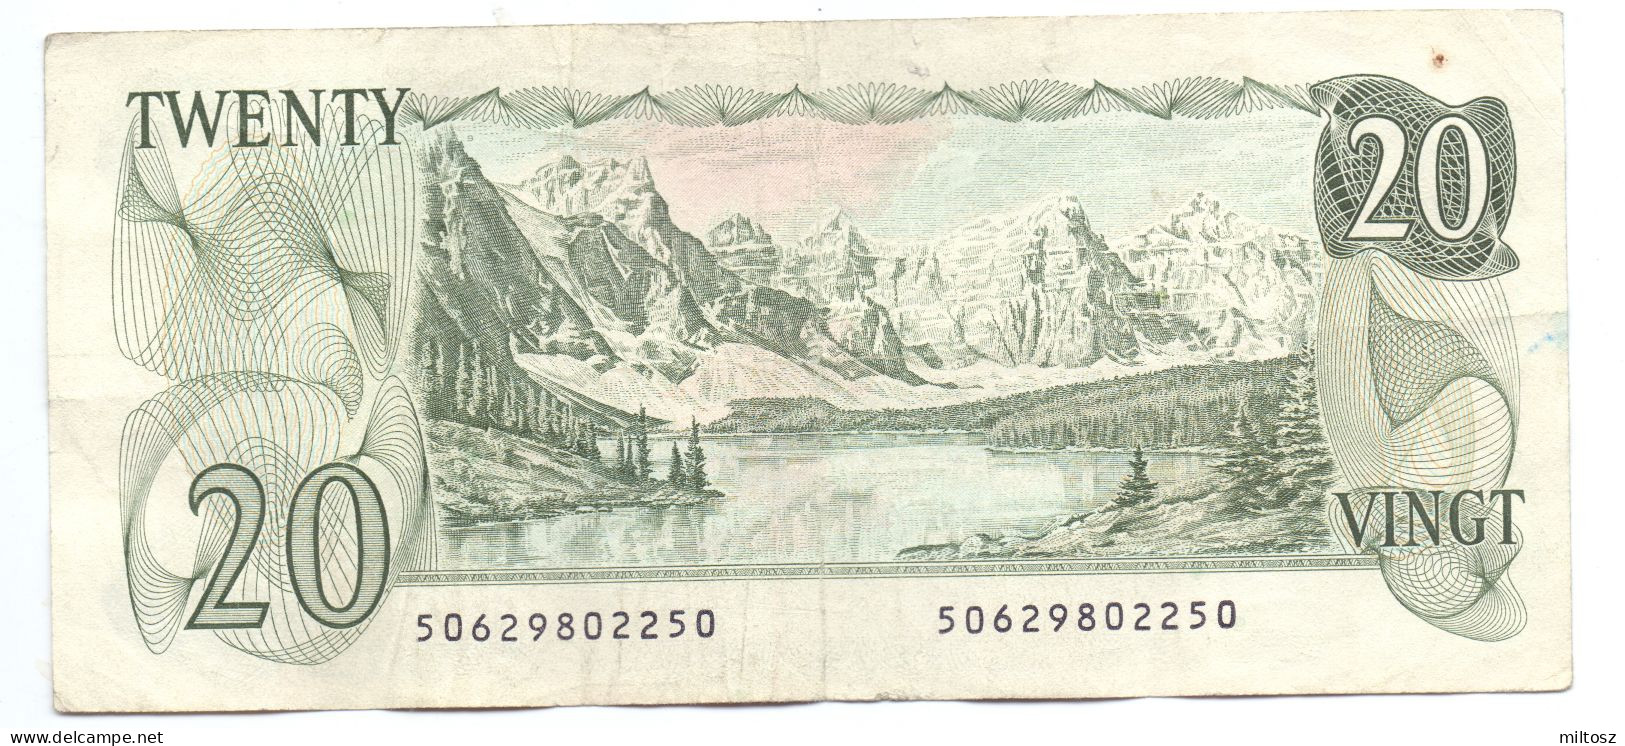 Canada 20 Dollars 1979 - Canada